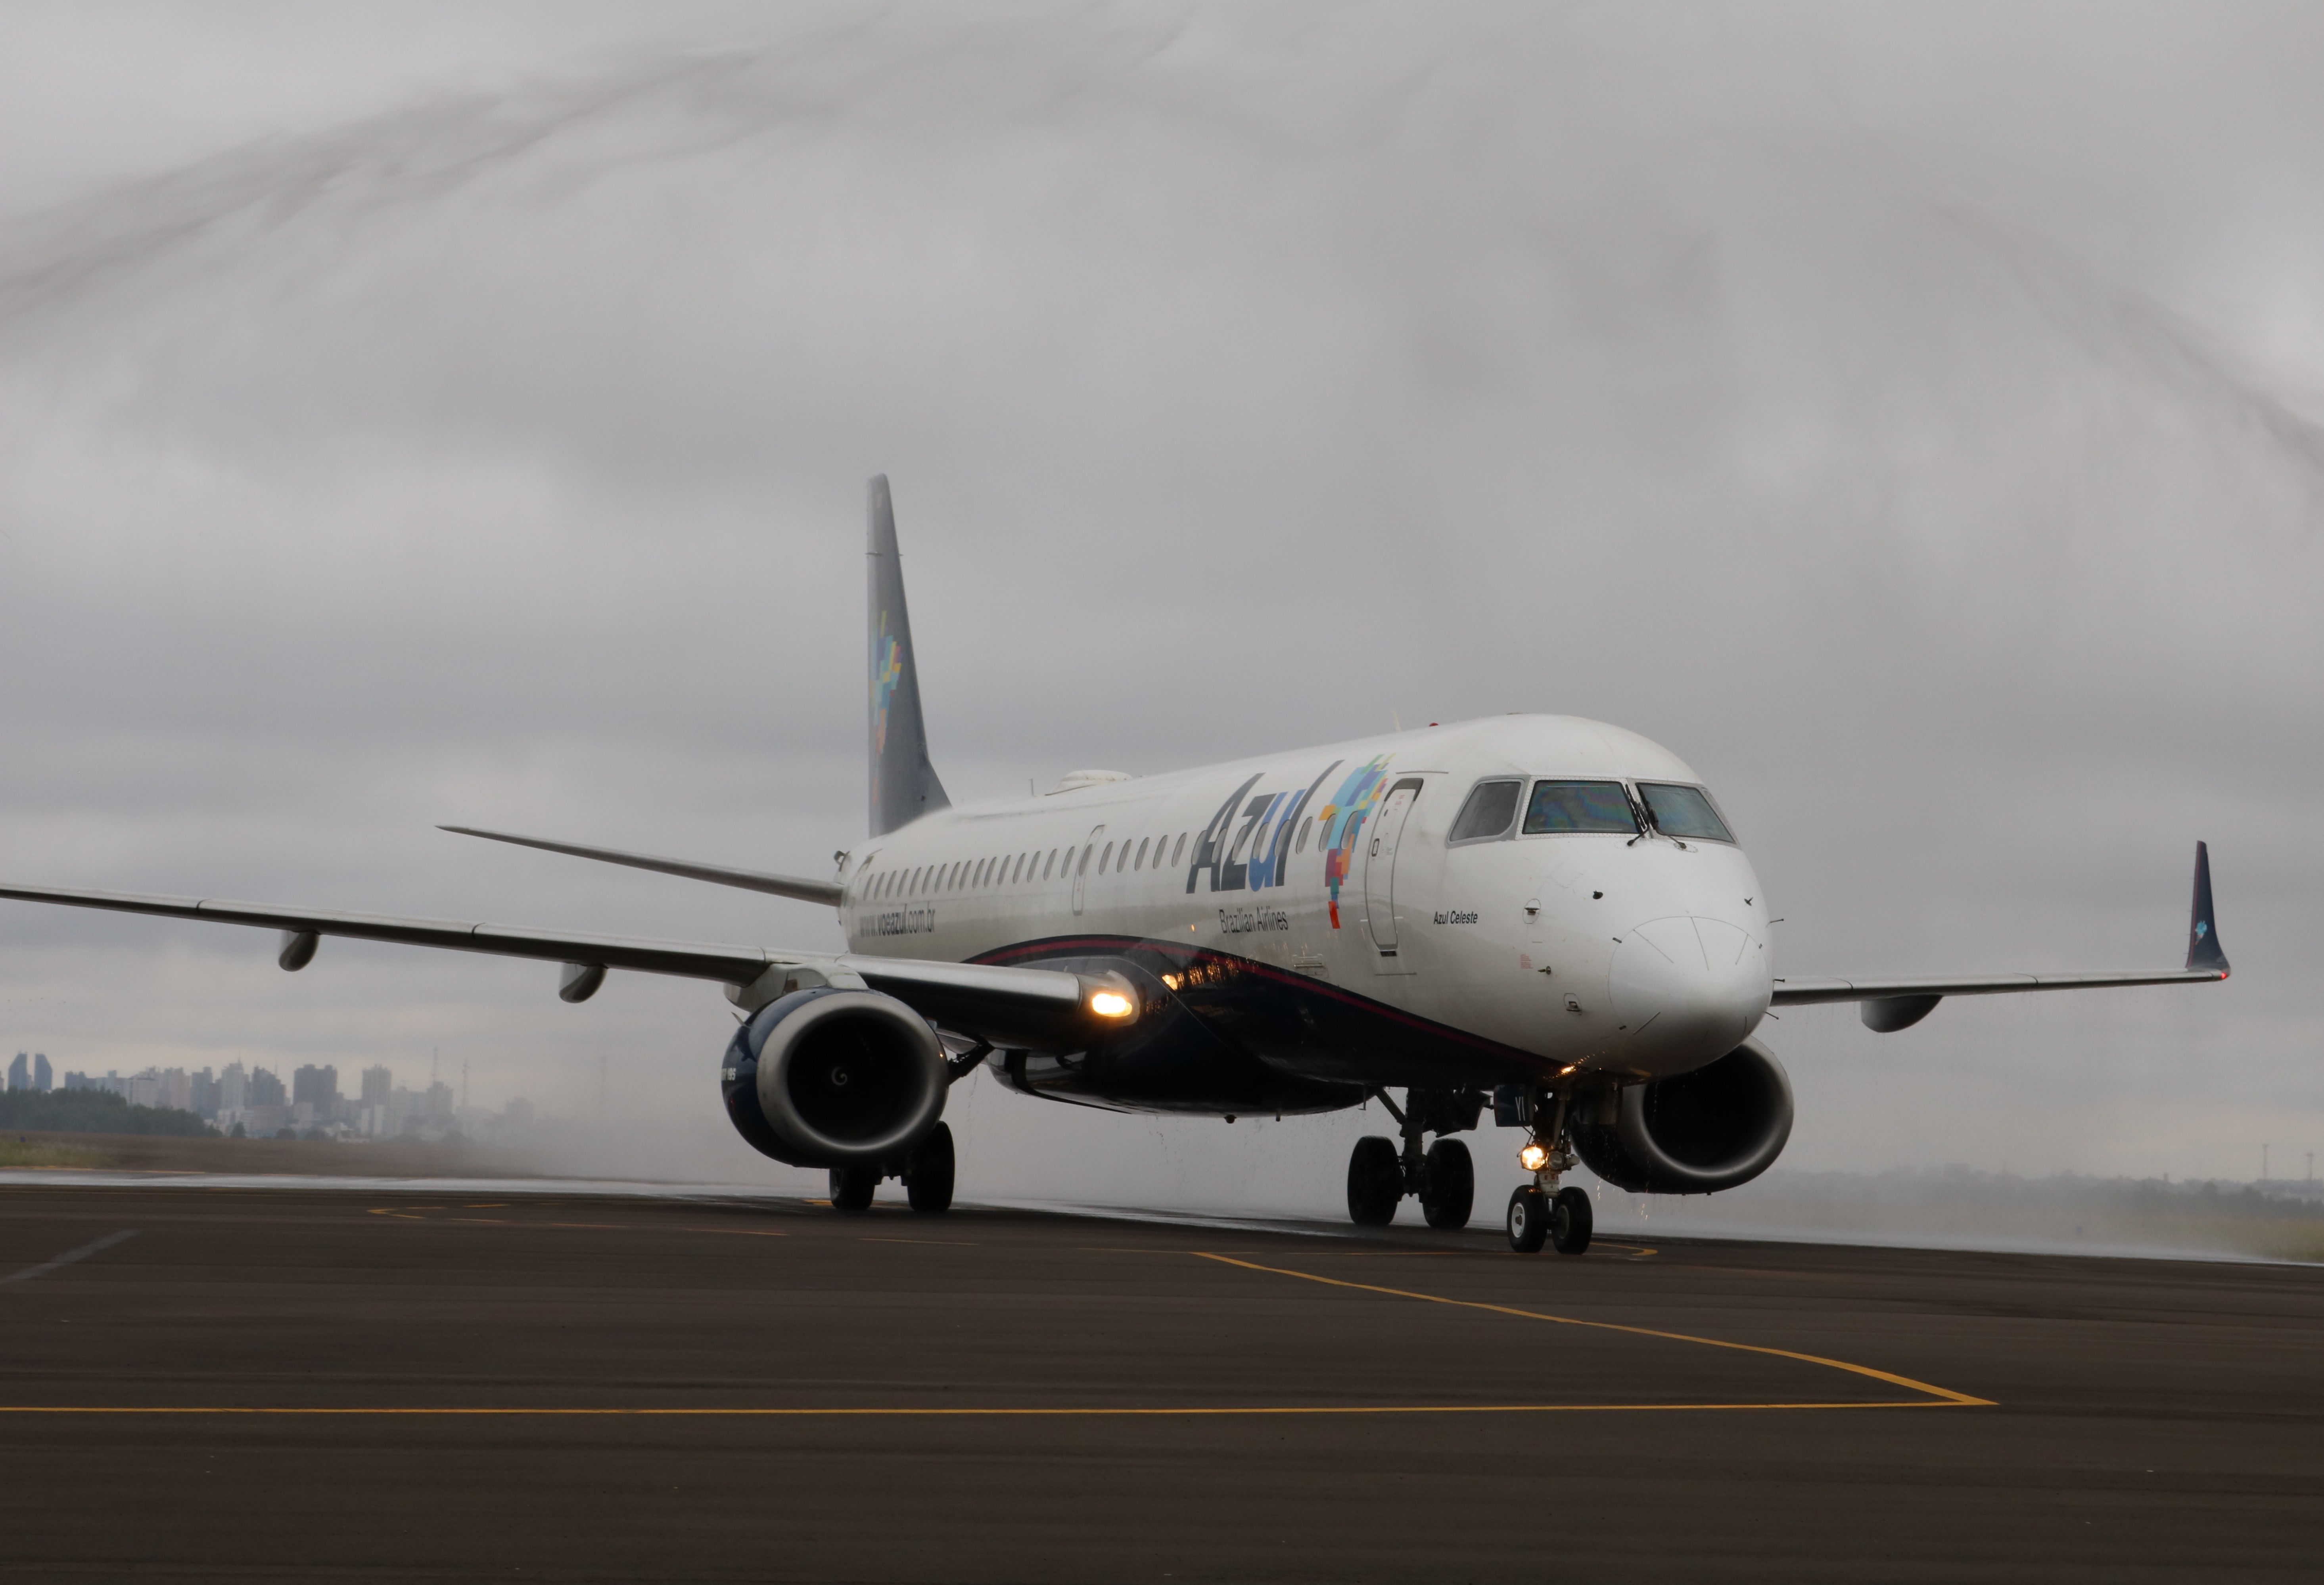 Aeroporto de Cascavel recebe voo inaugural